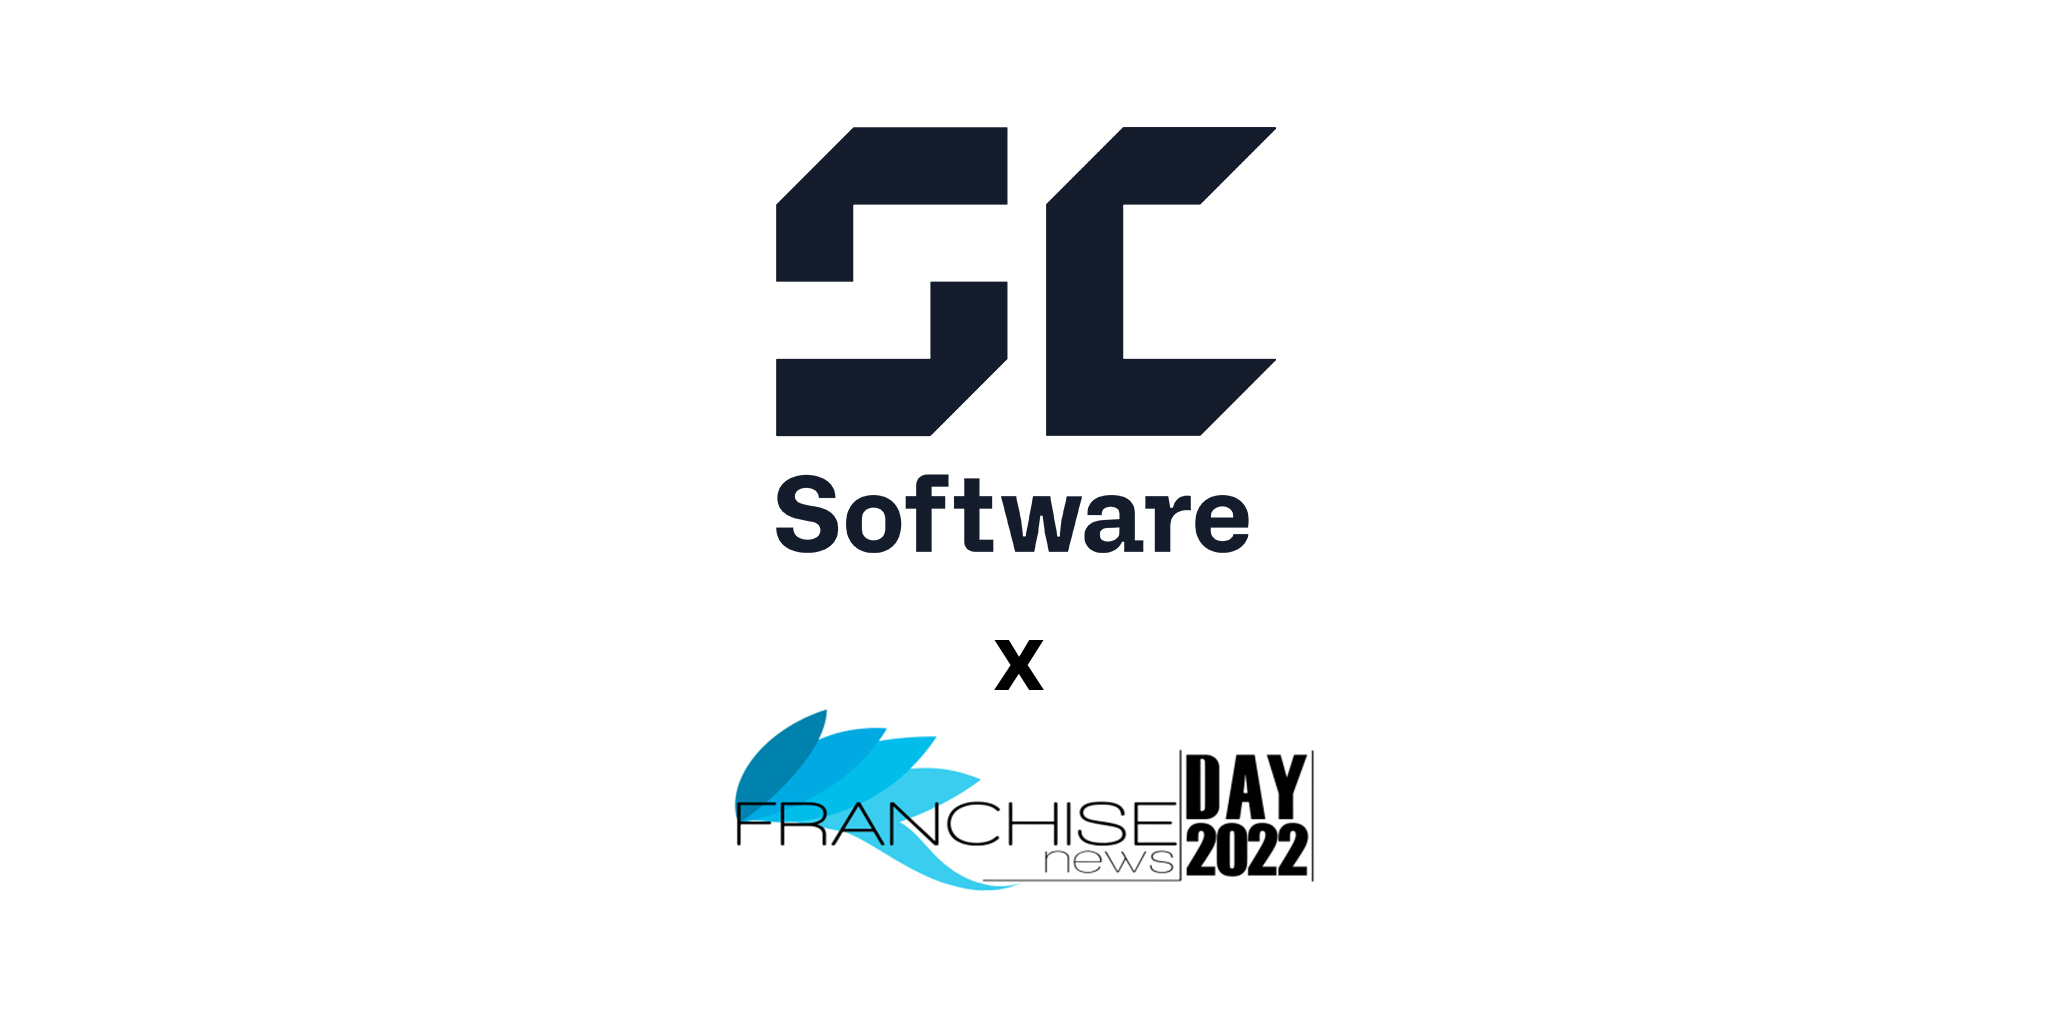 franchise news x sc software